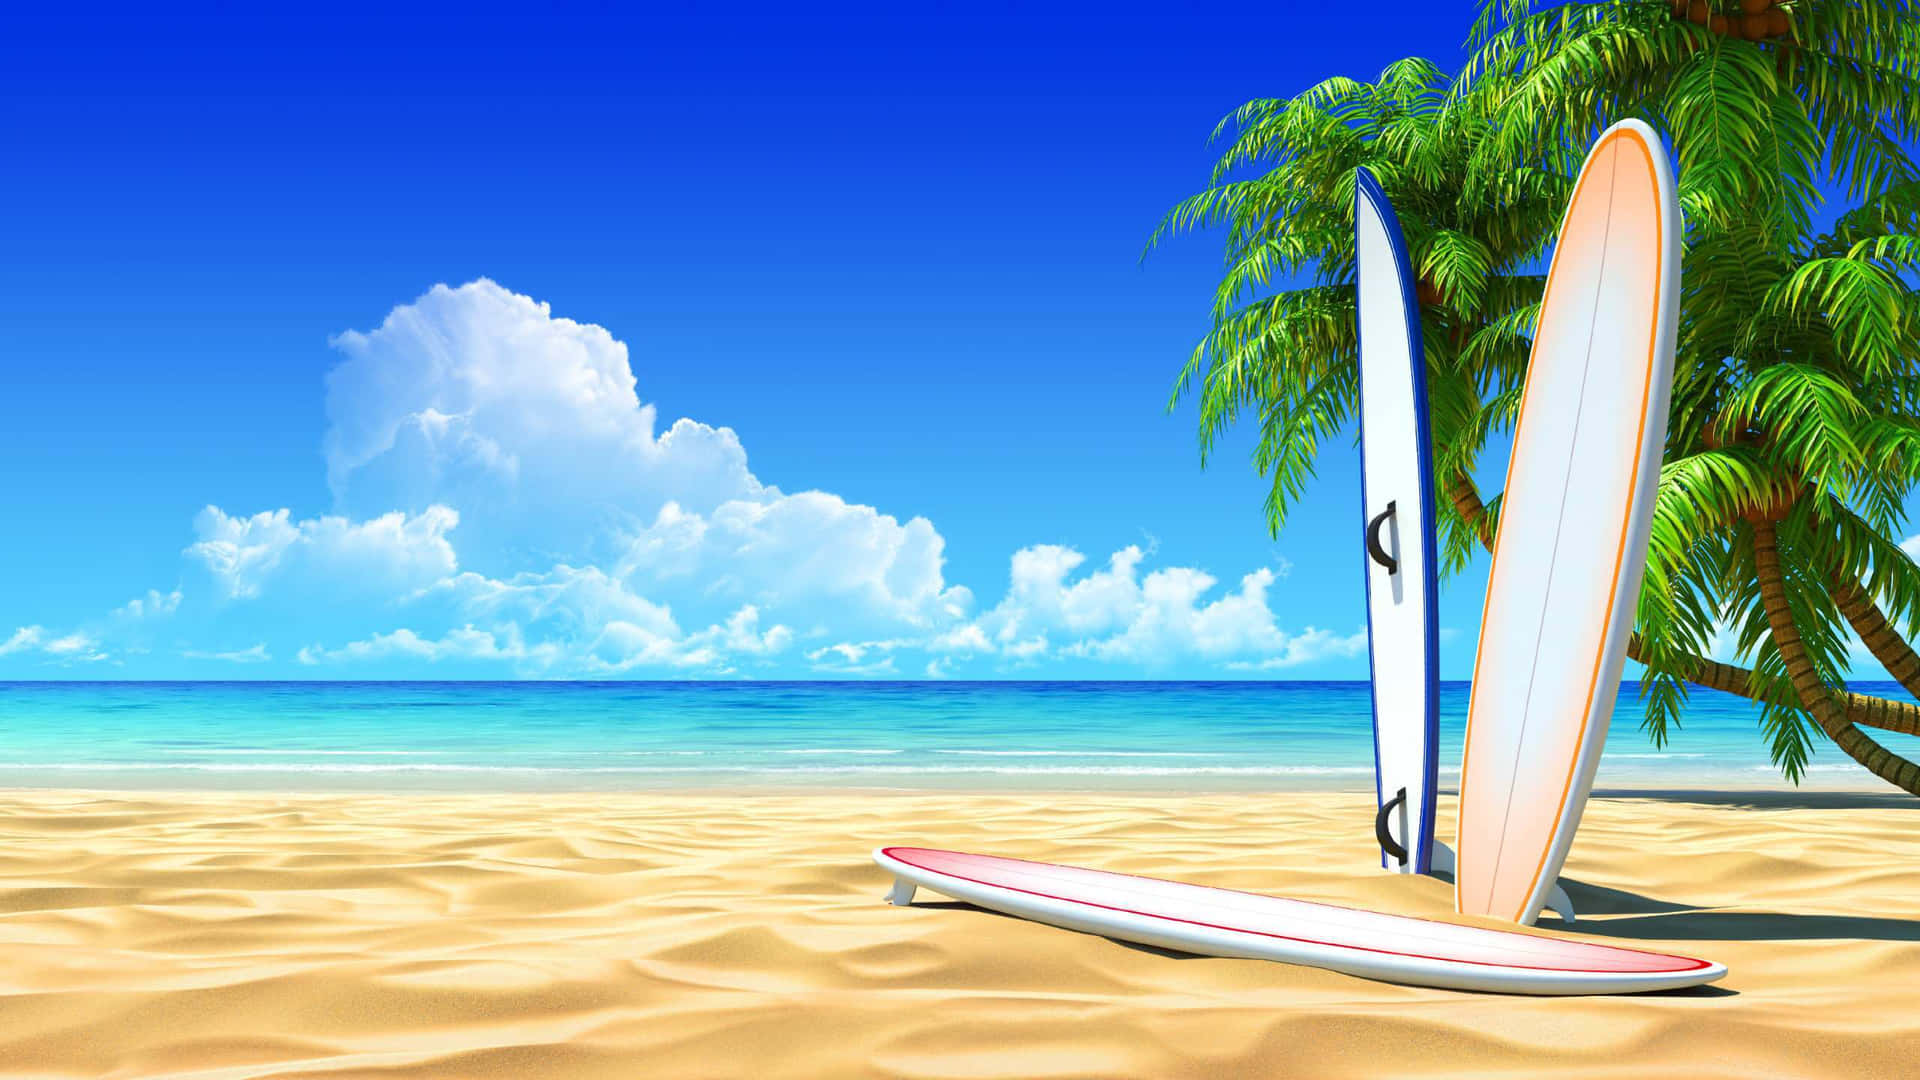 Surfboard Digital Art Wallpaper